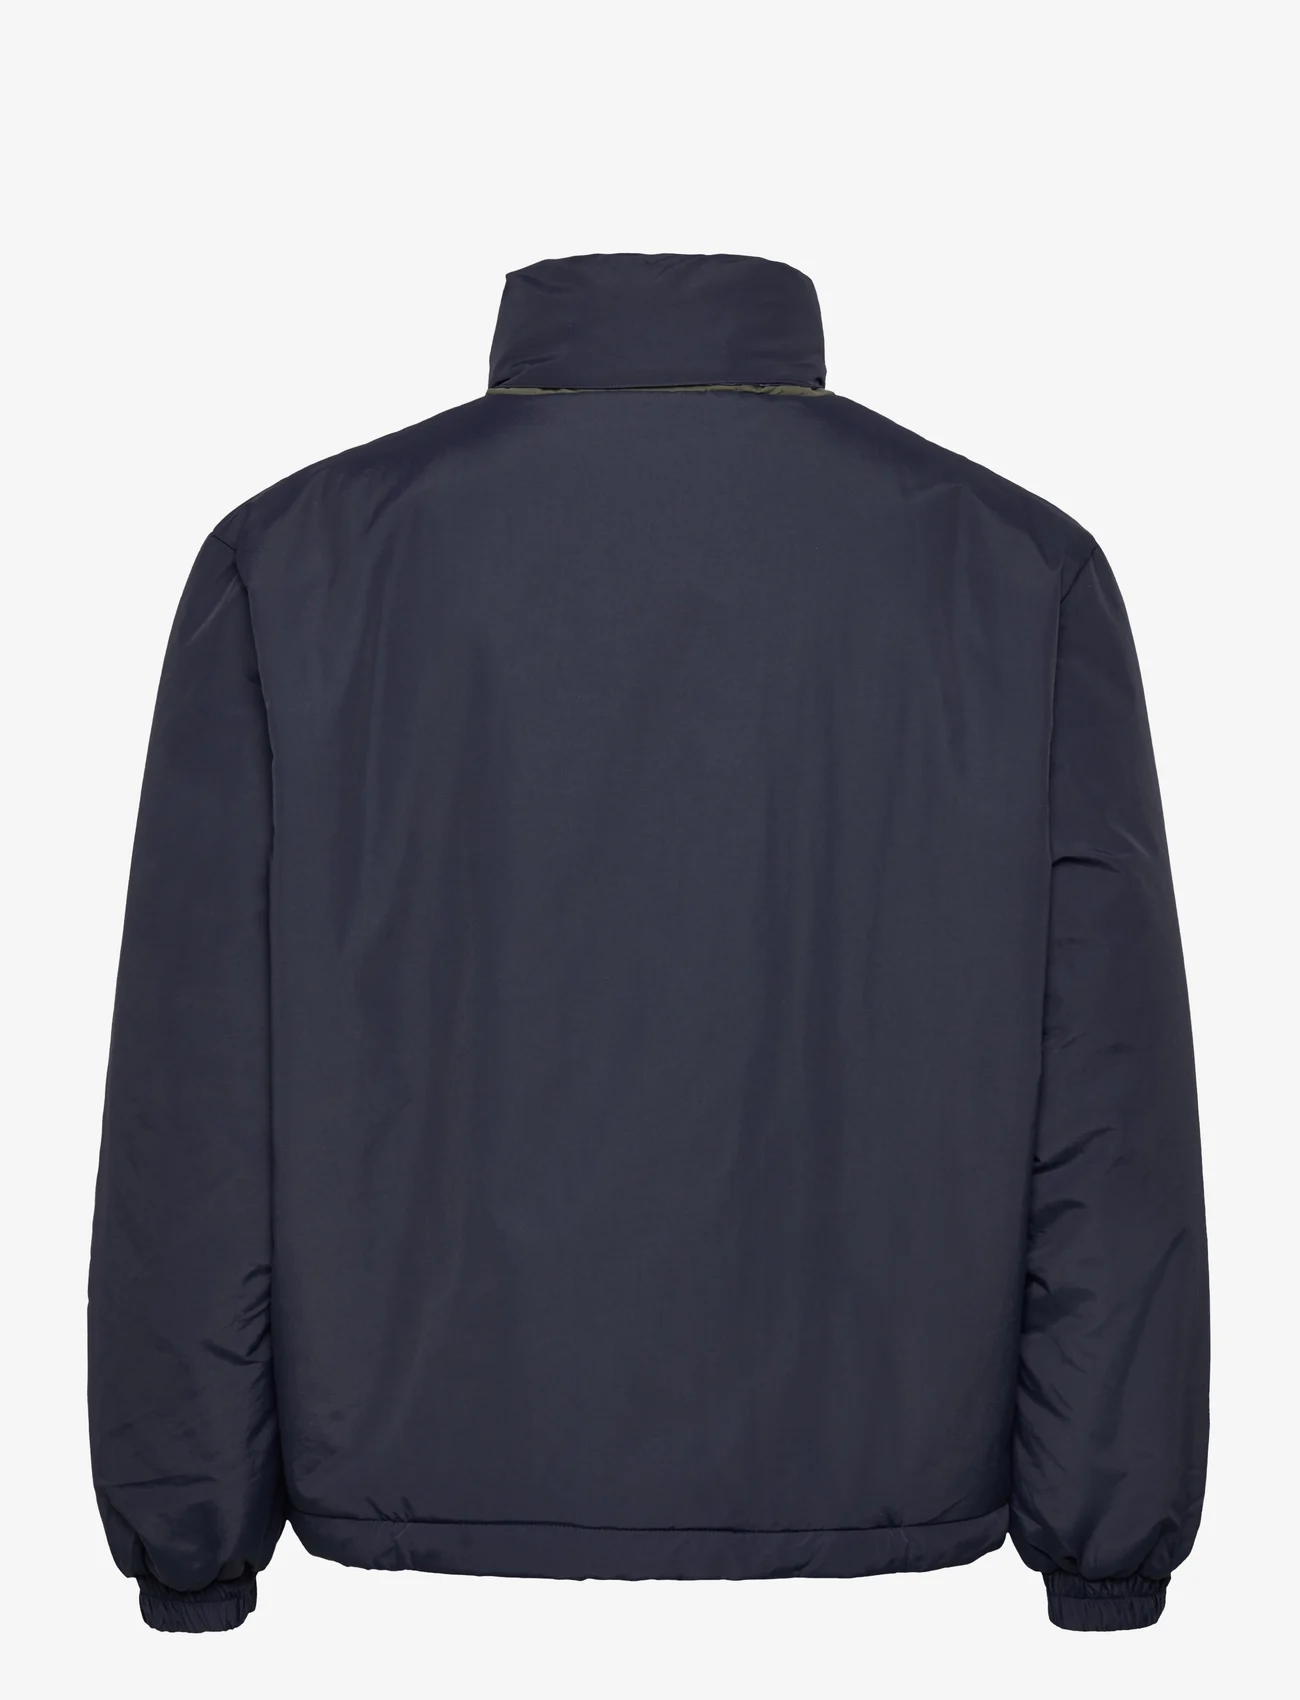 Soulland - Jim jacket - padded jackets - navy - 1